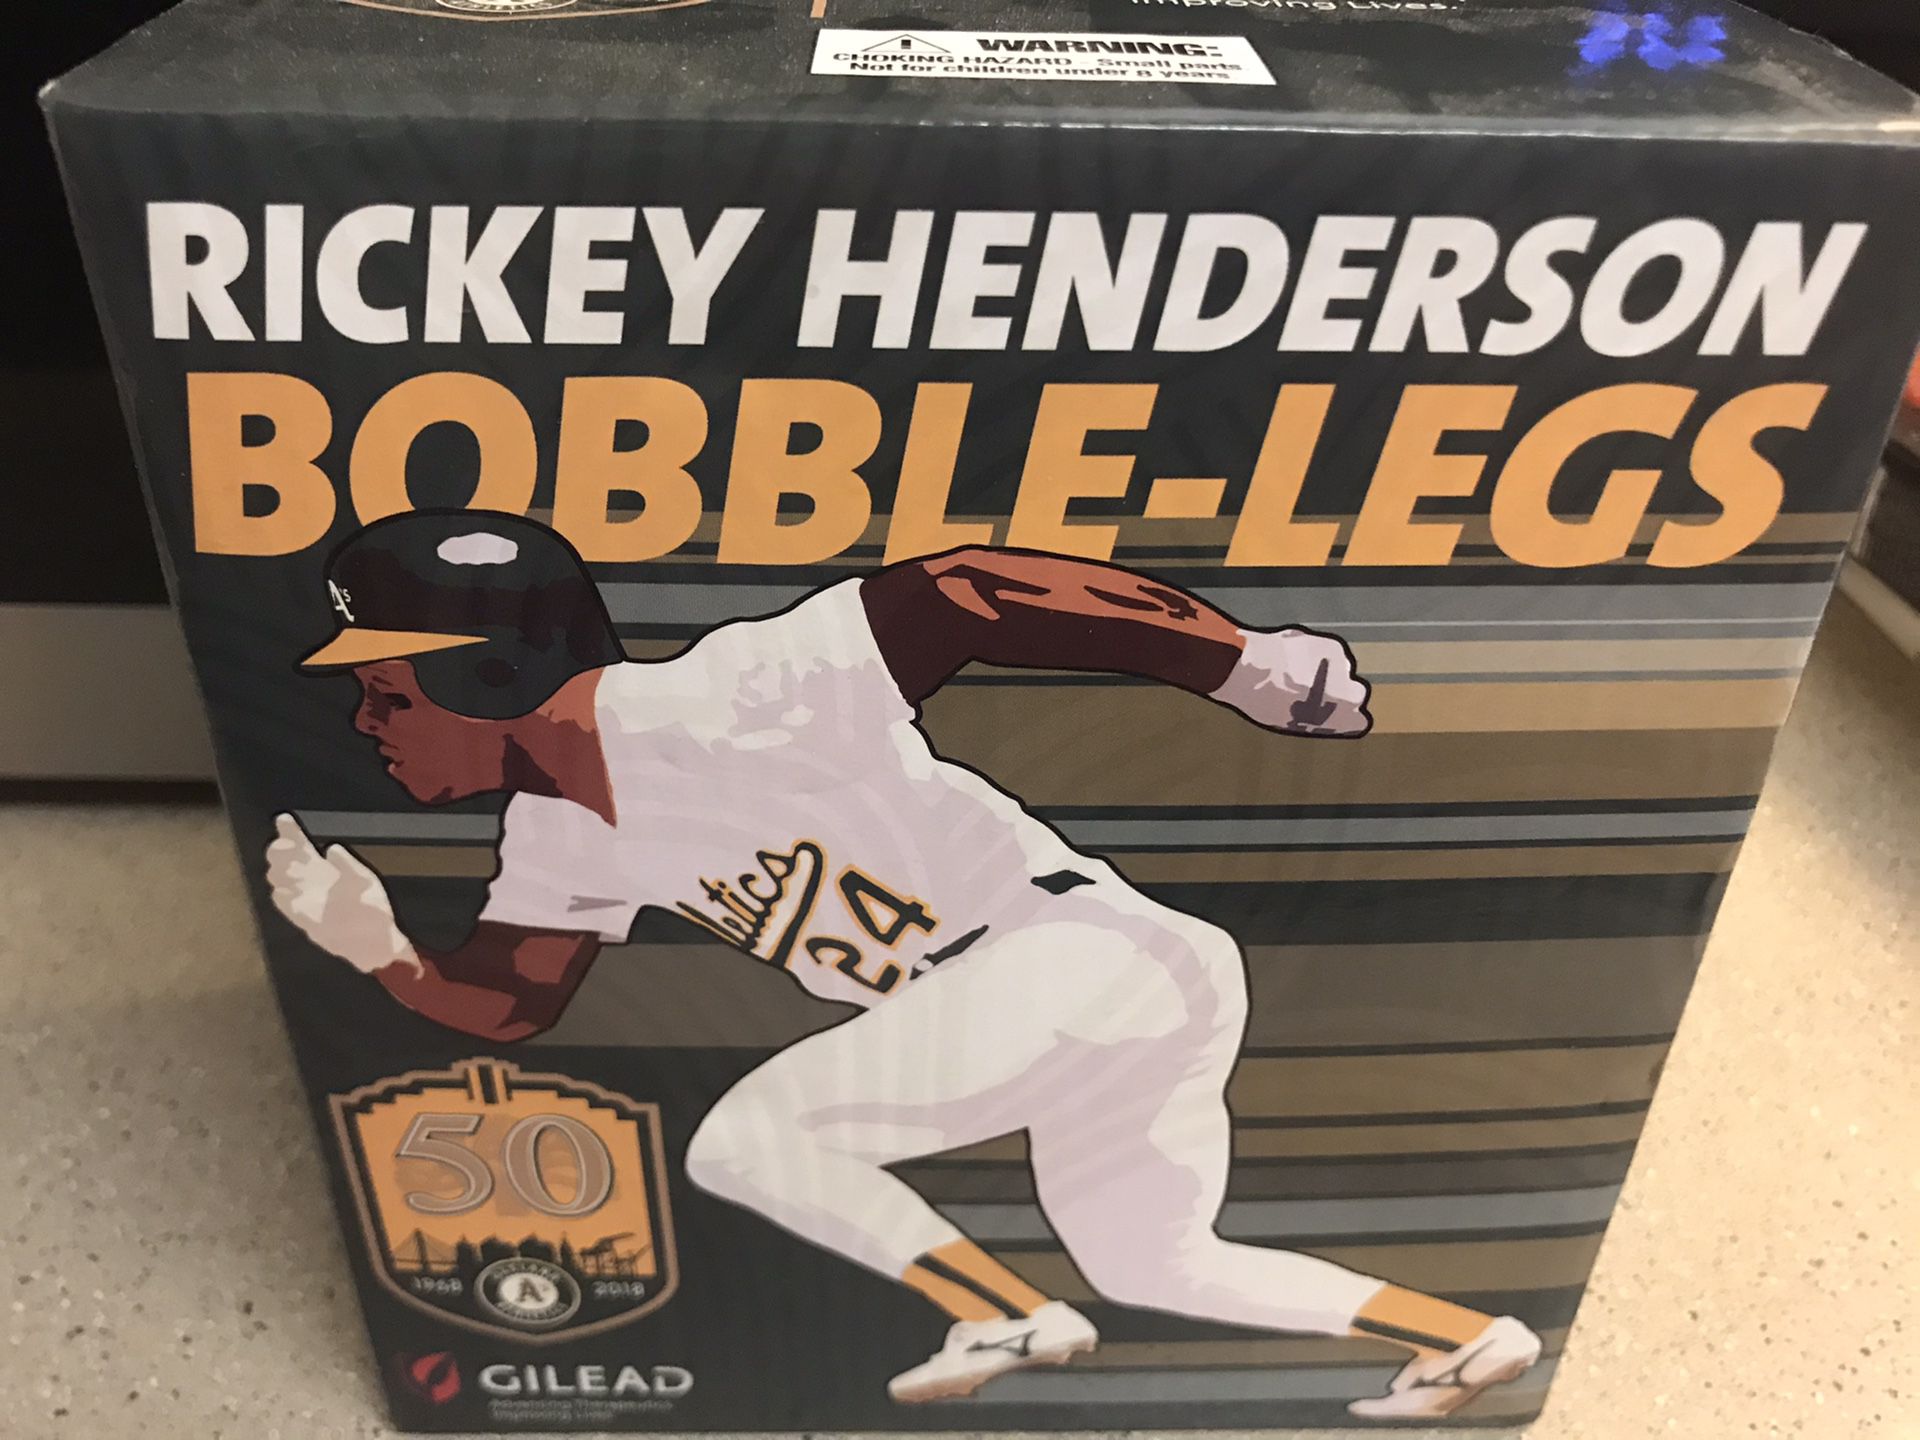 Rickey Henderson Bobble-legs